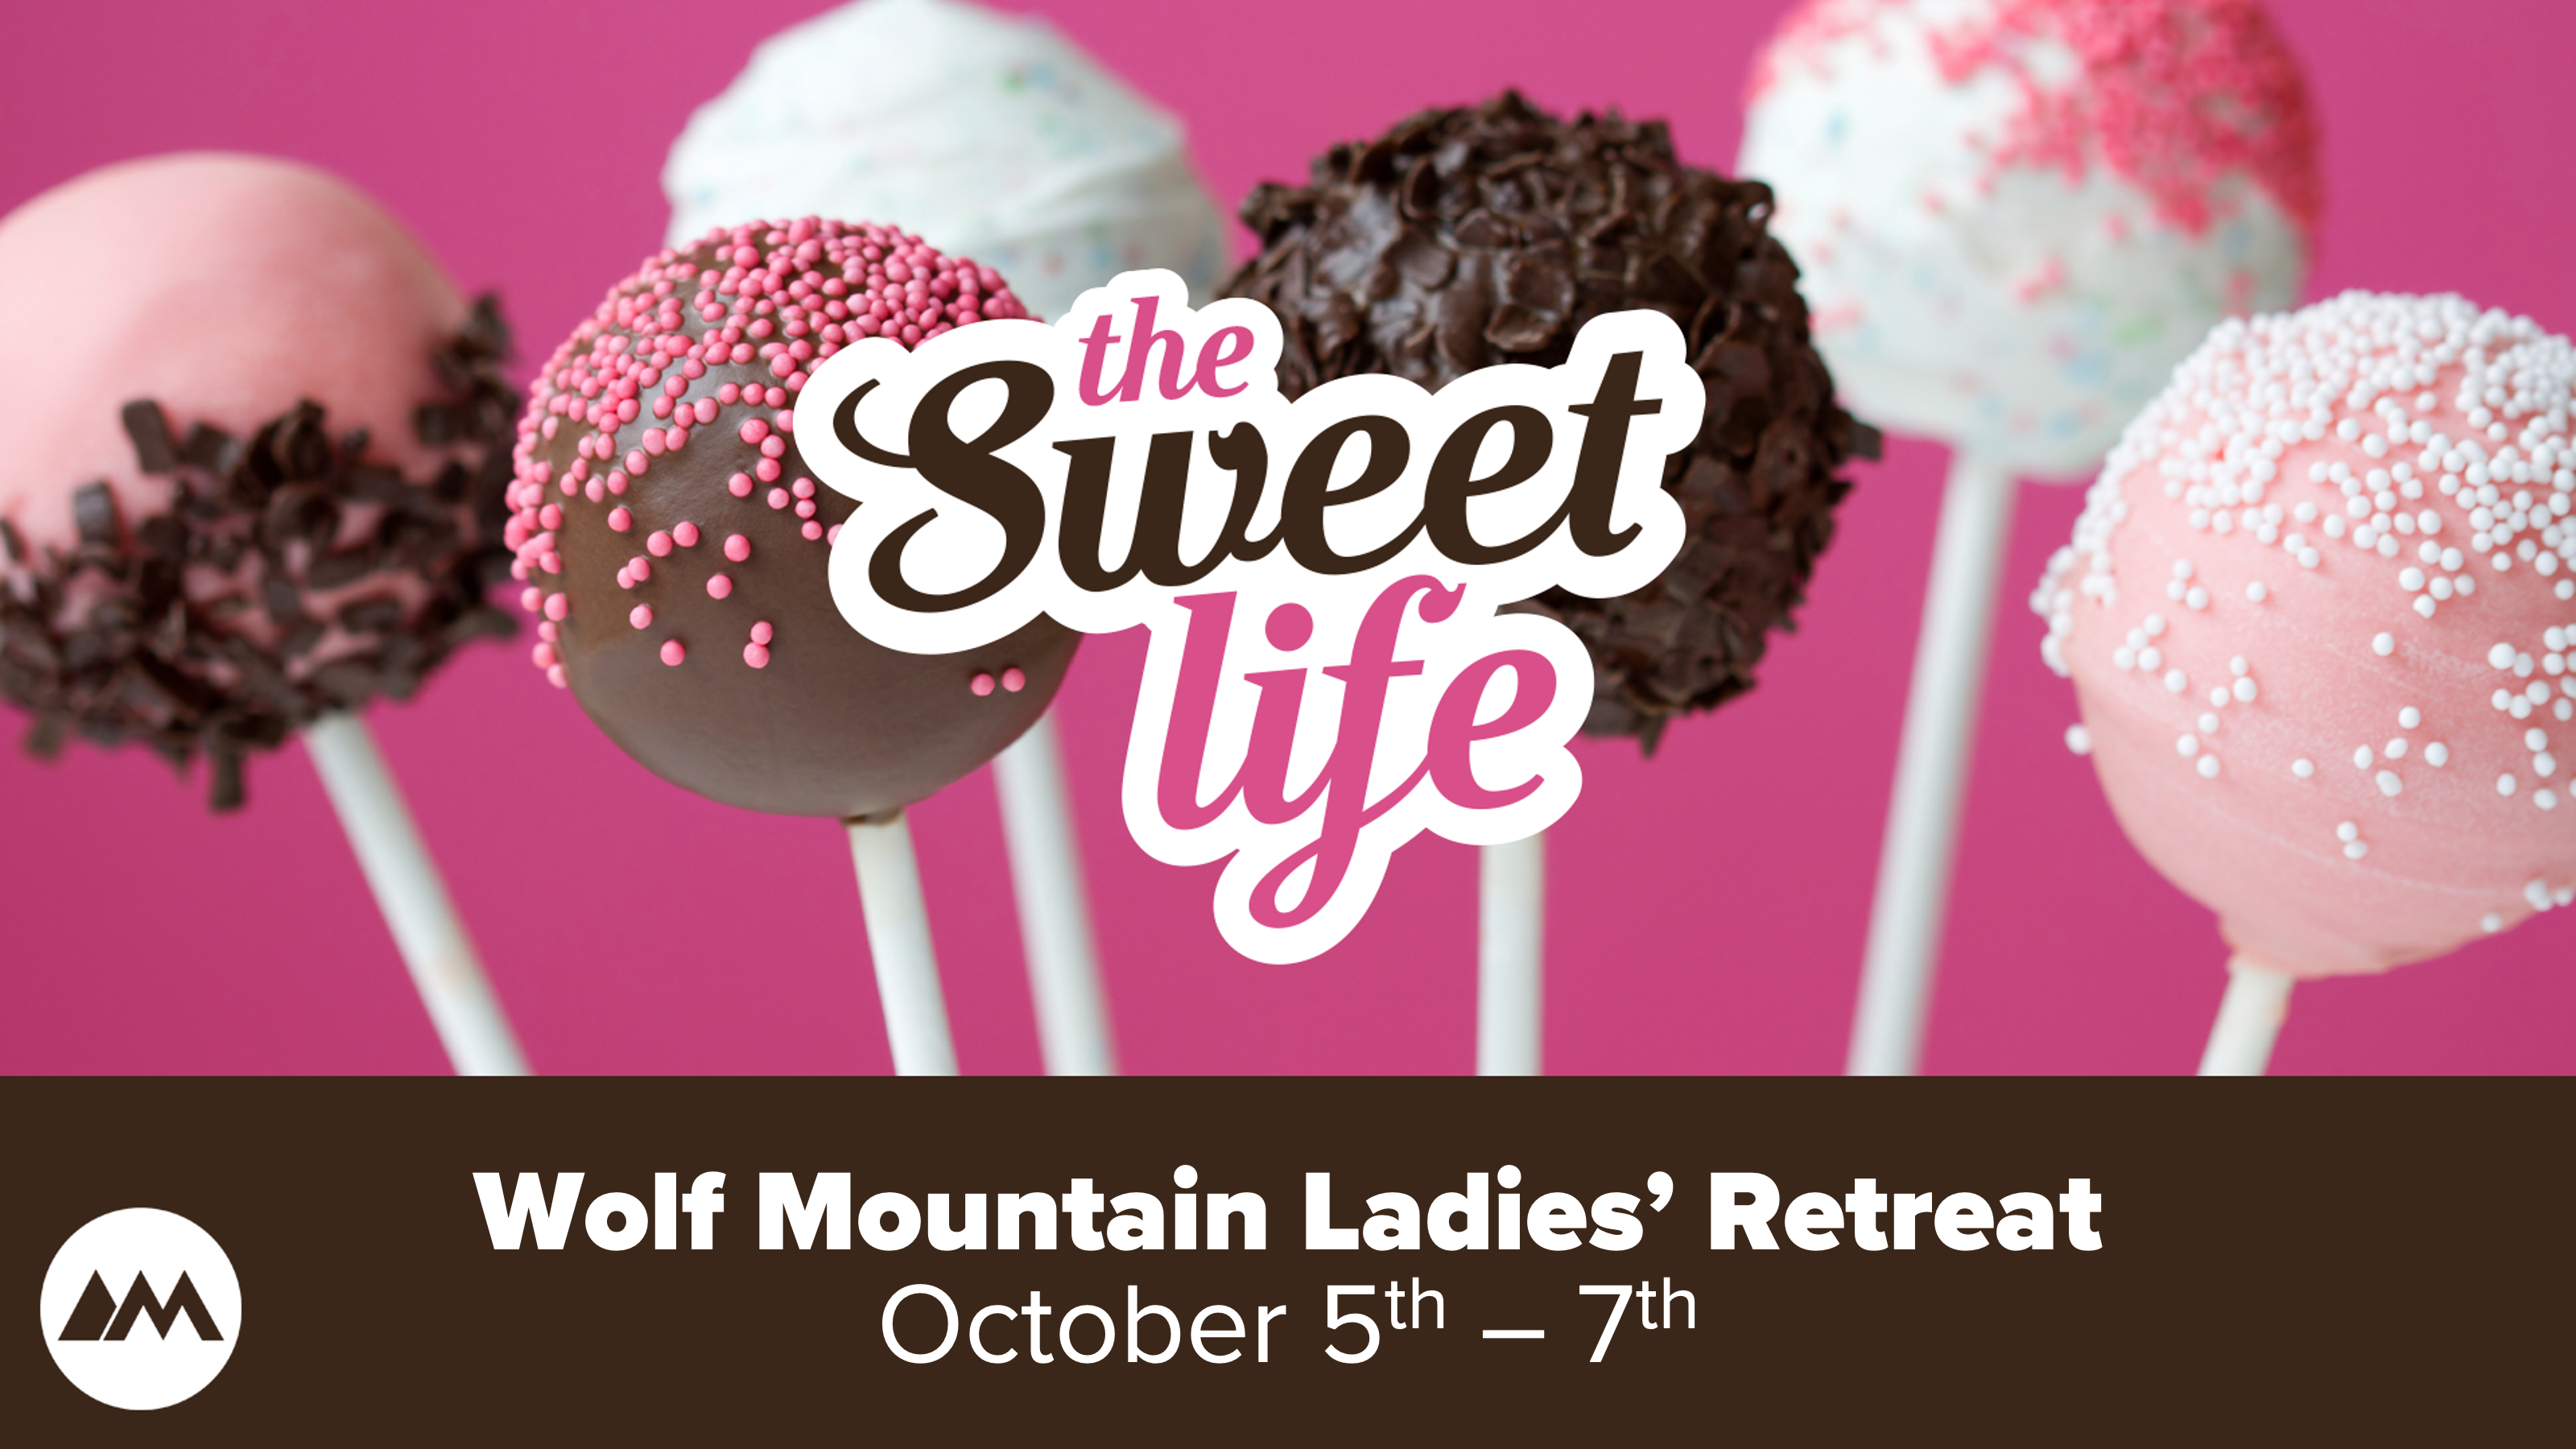 The Sweet Life—Wolf Mountain Ladies' Retreat